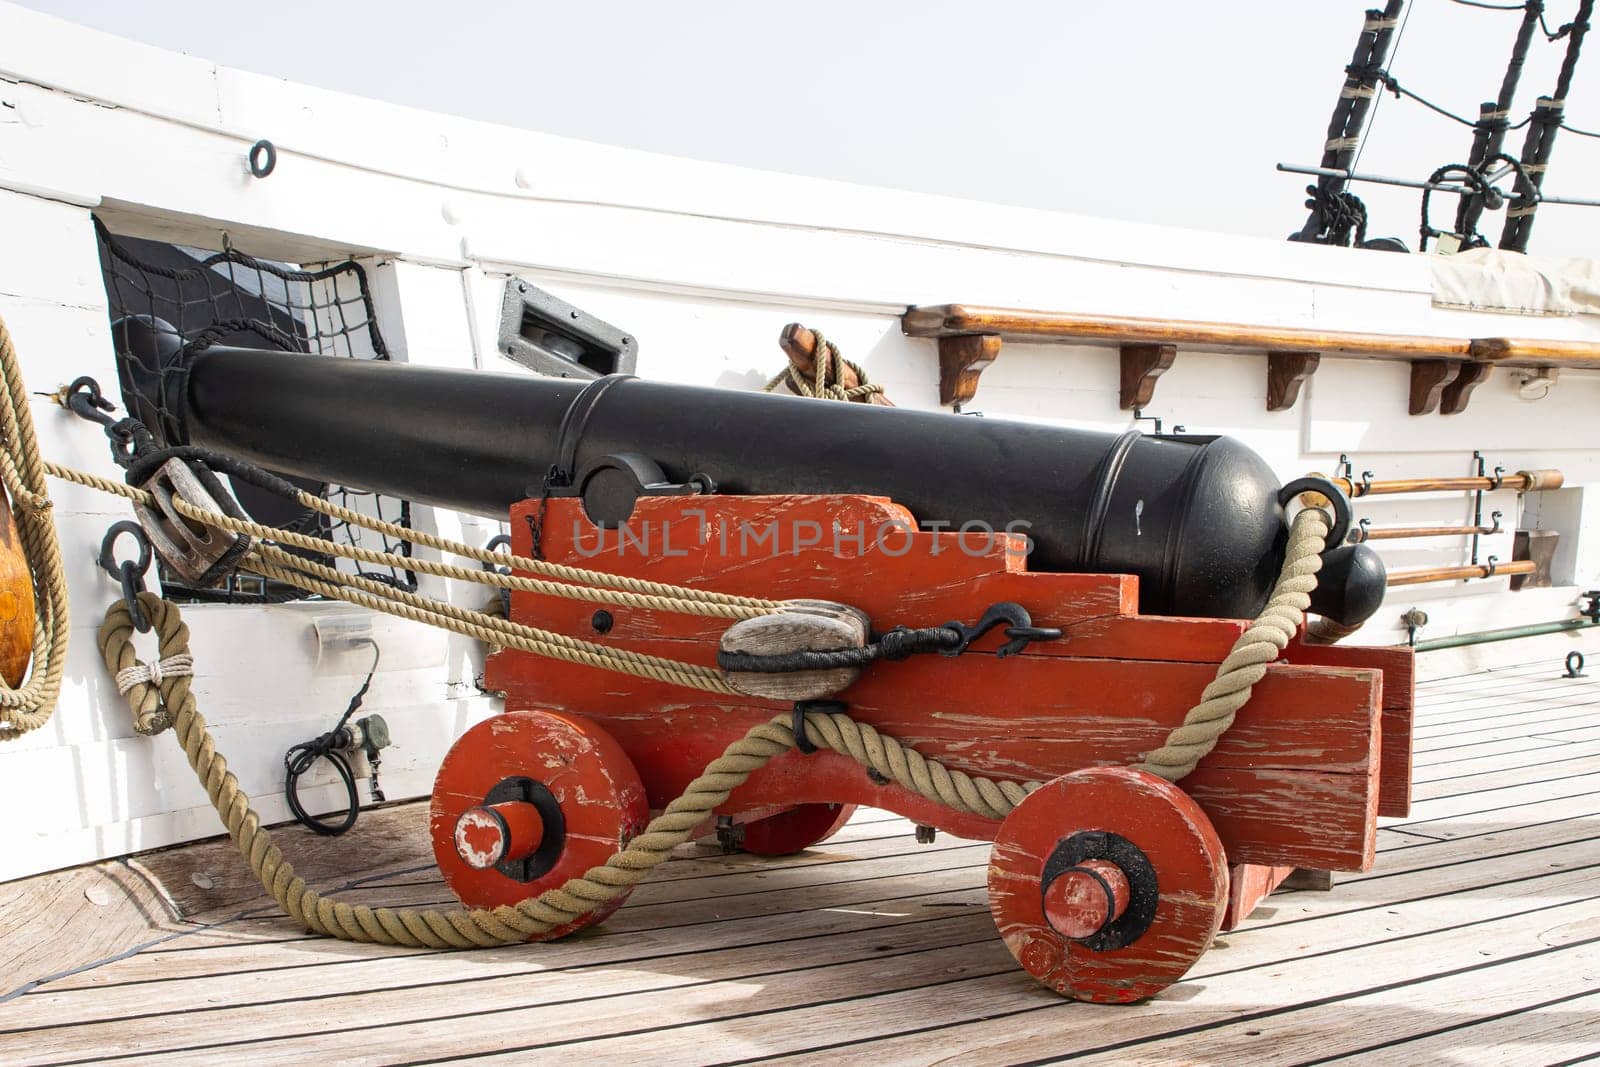 Historirical retro metal cannon on battle sailing vessel by Studia72